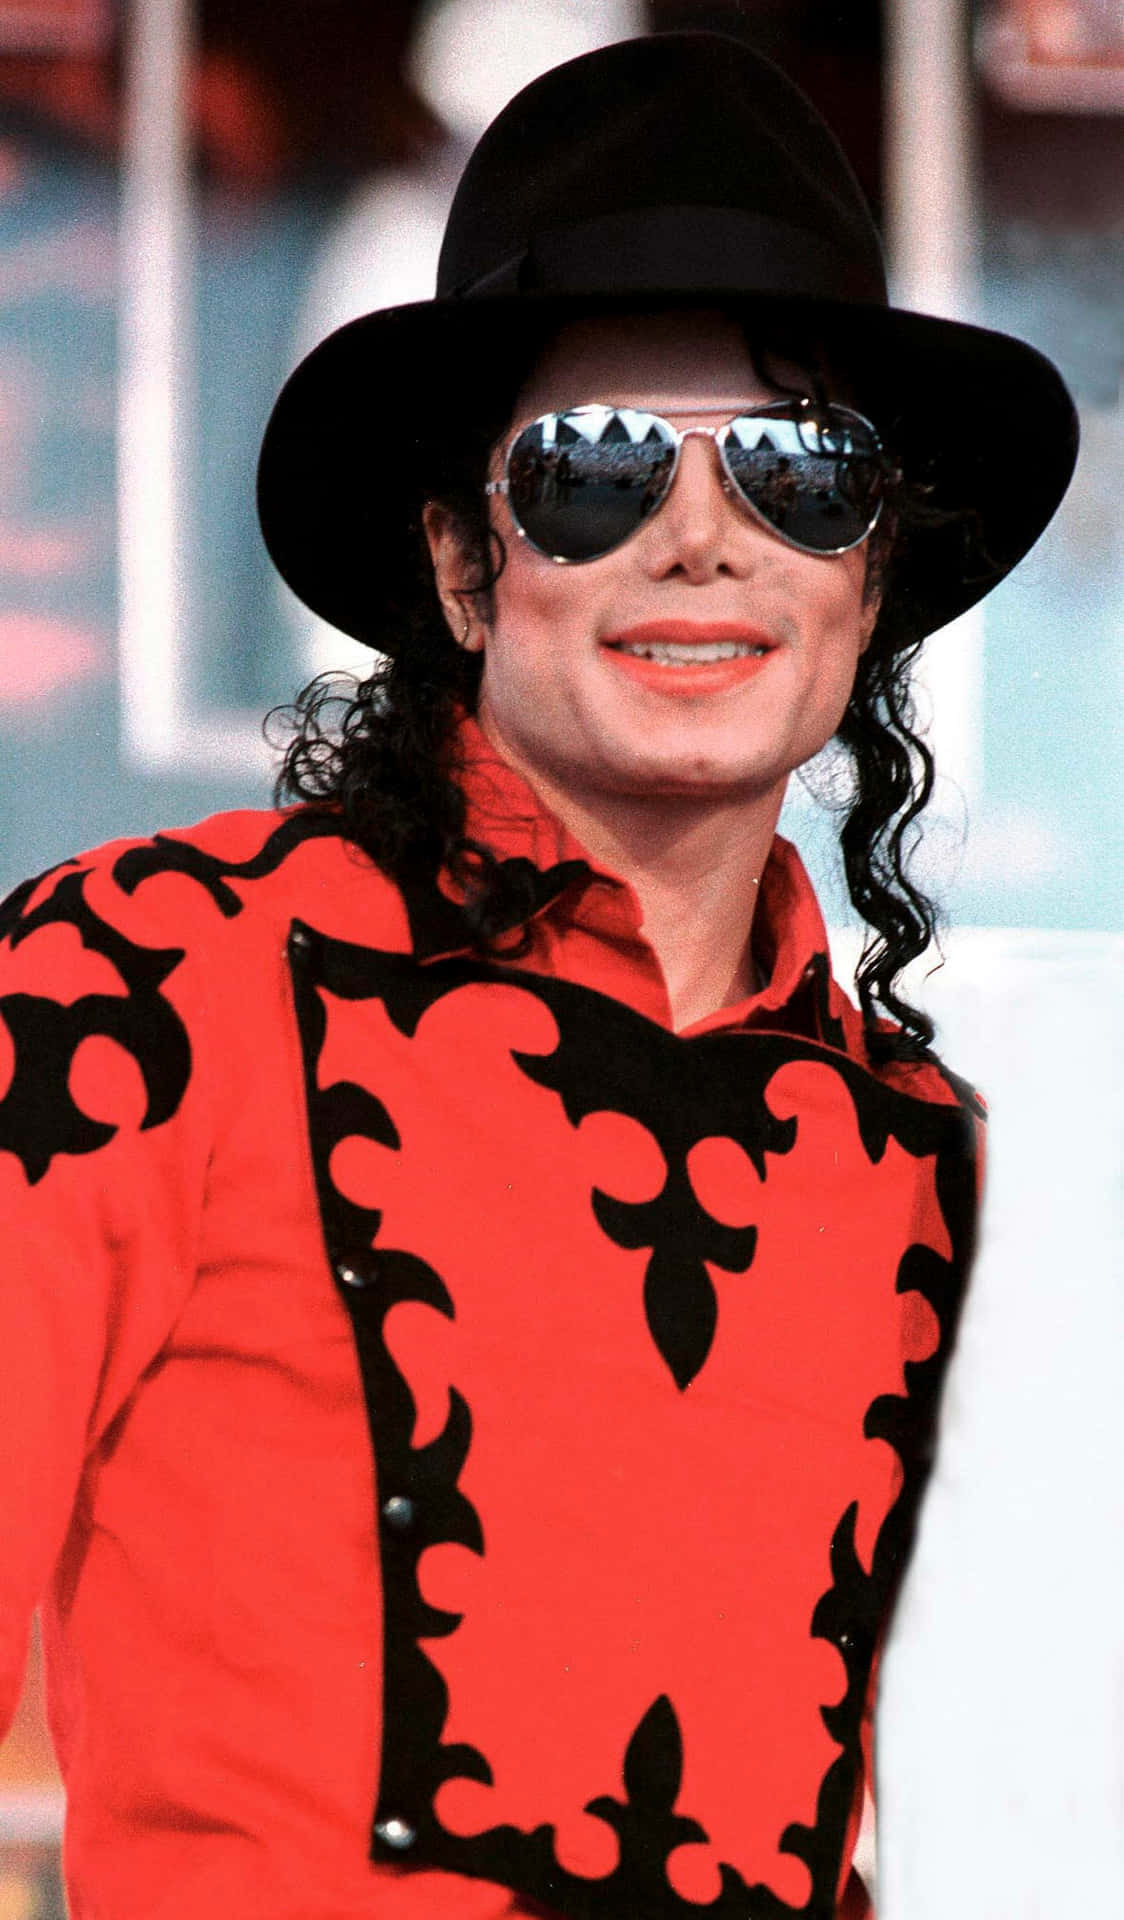 Imagensdo Michael Jackson.